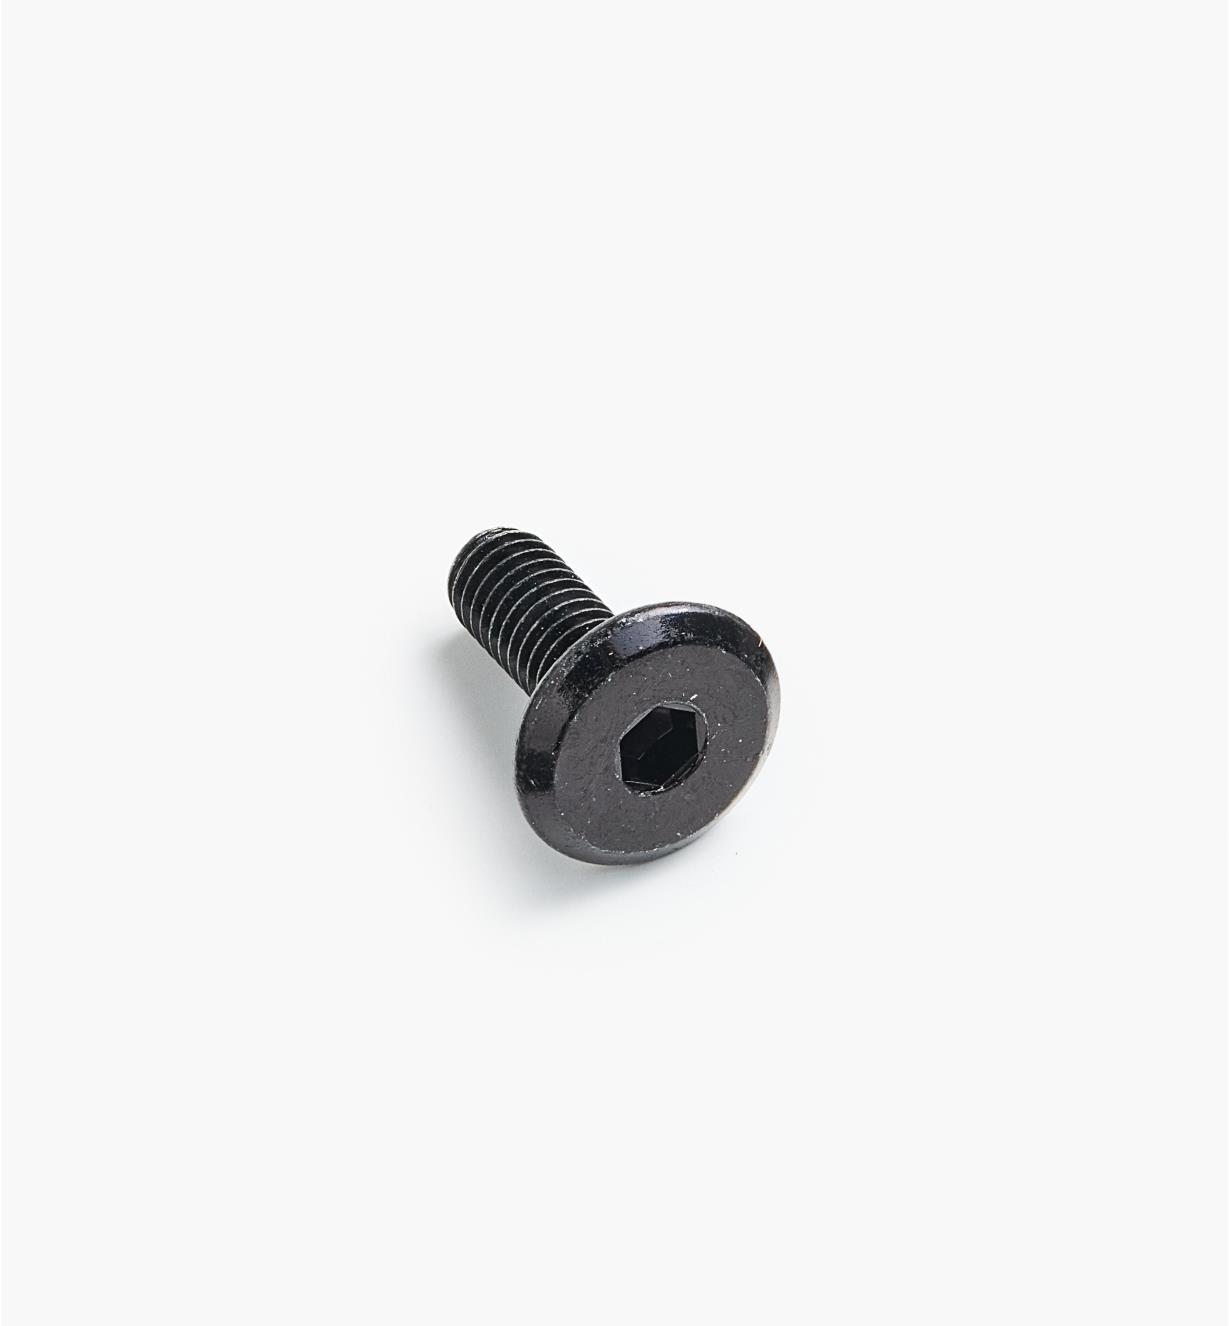 00M9916 - M6 × 16mm Black Flat-Head Bolt, ea.